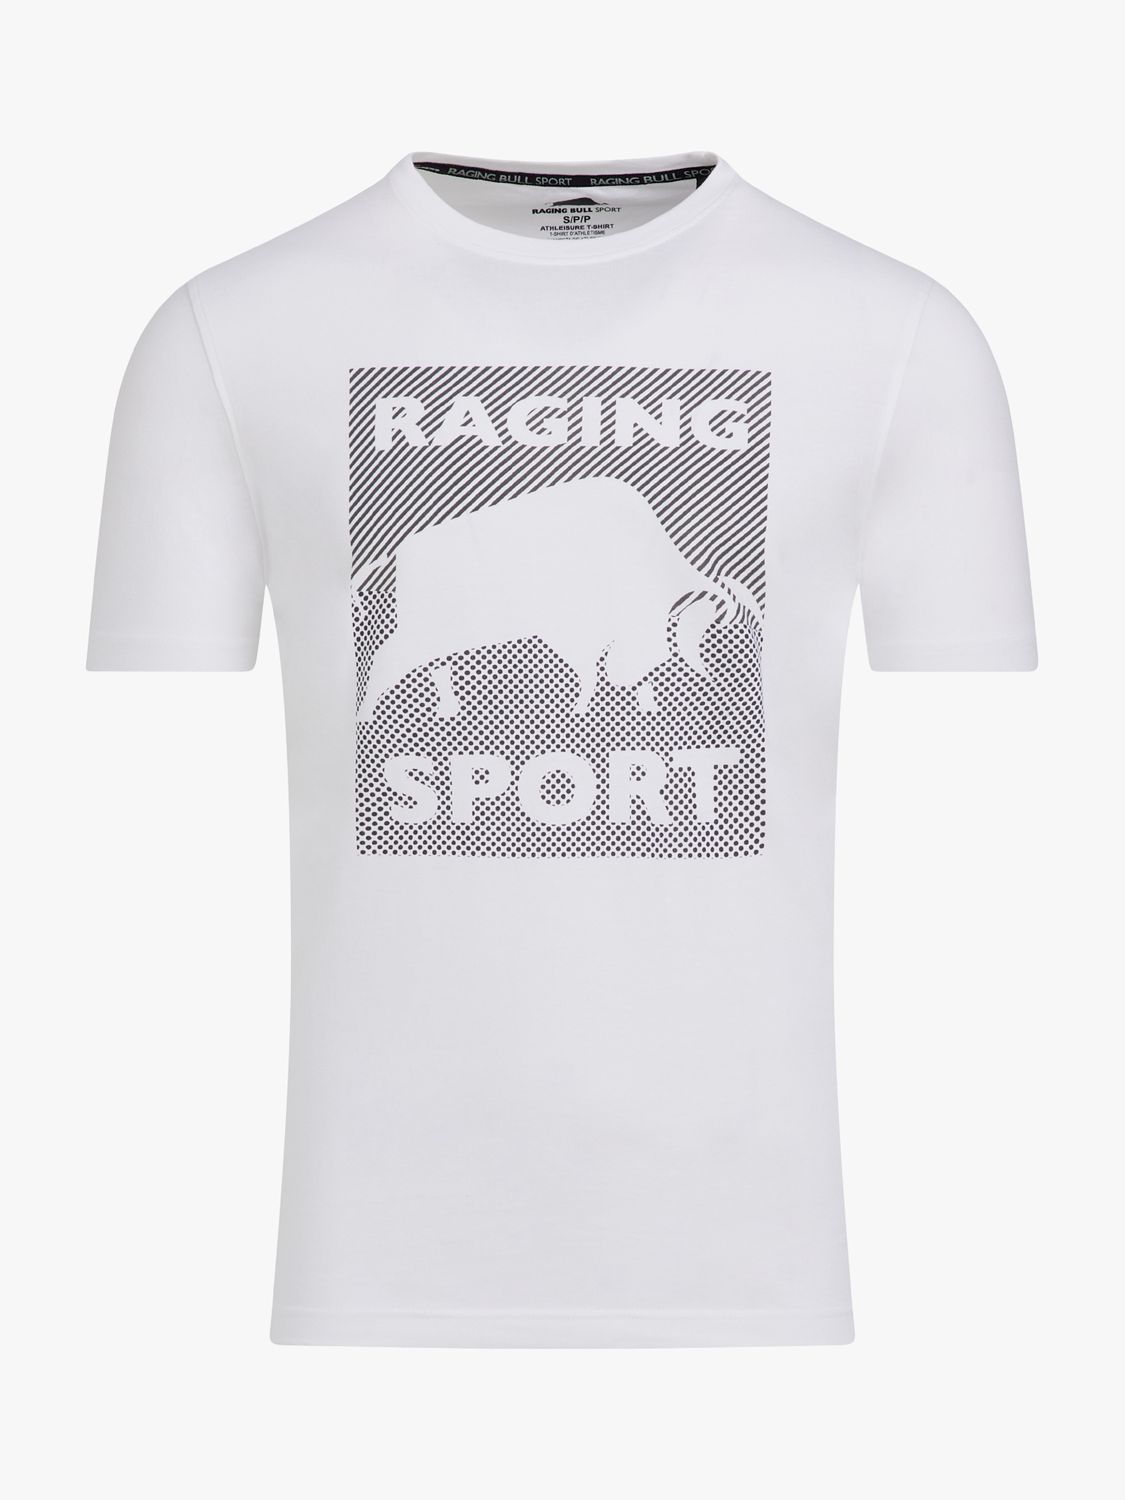 Raging Bull Sport Block Bull Graphic T-Shirt, White, S